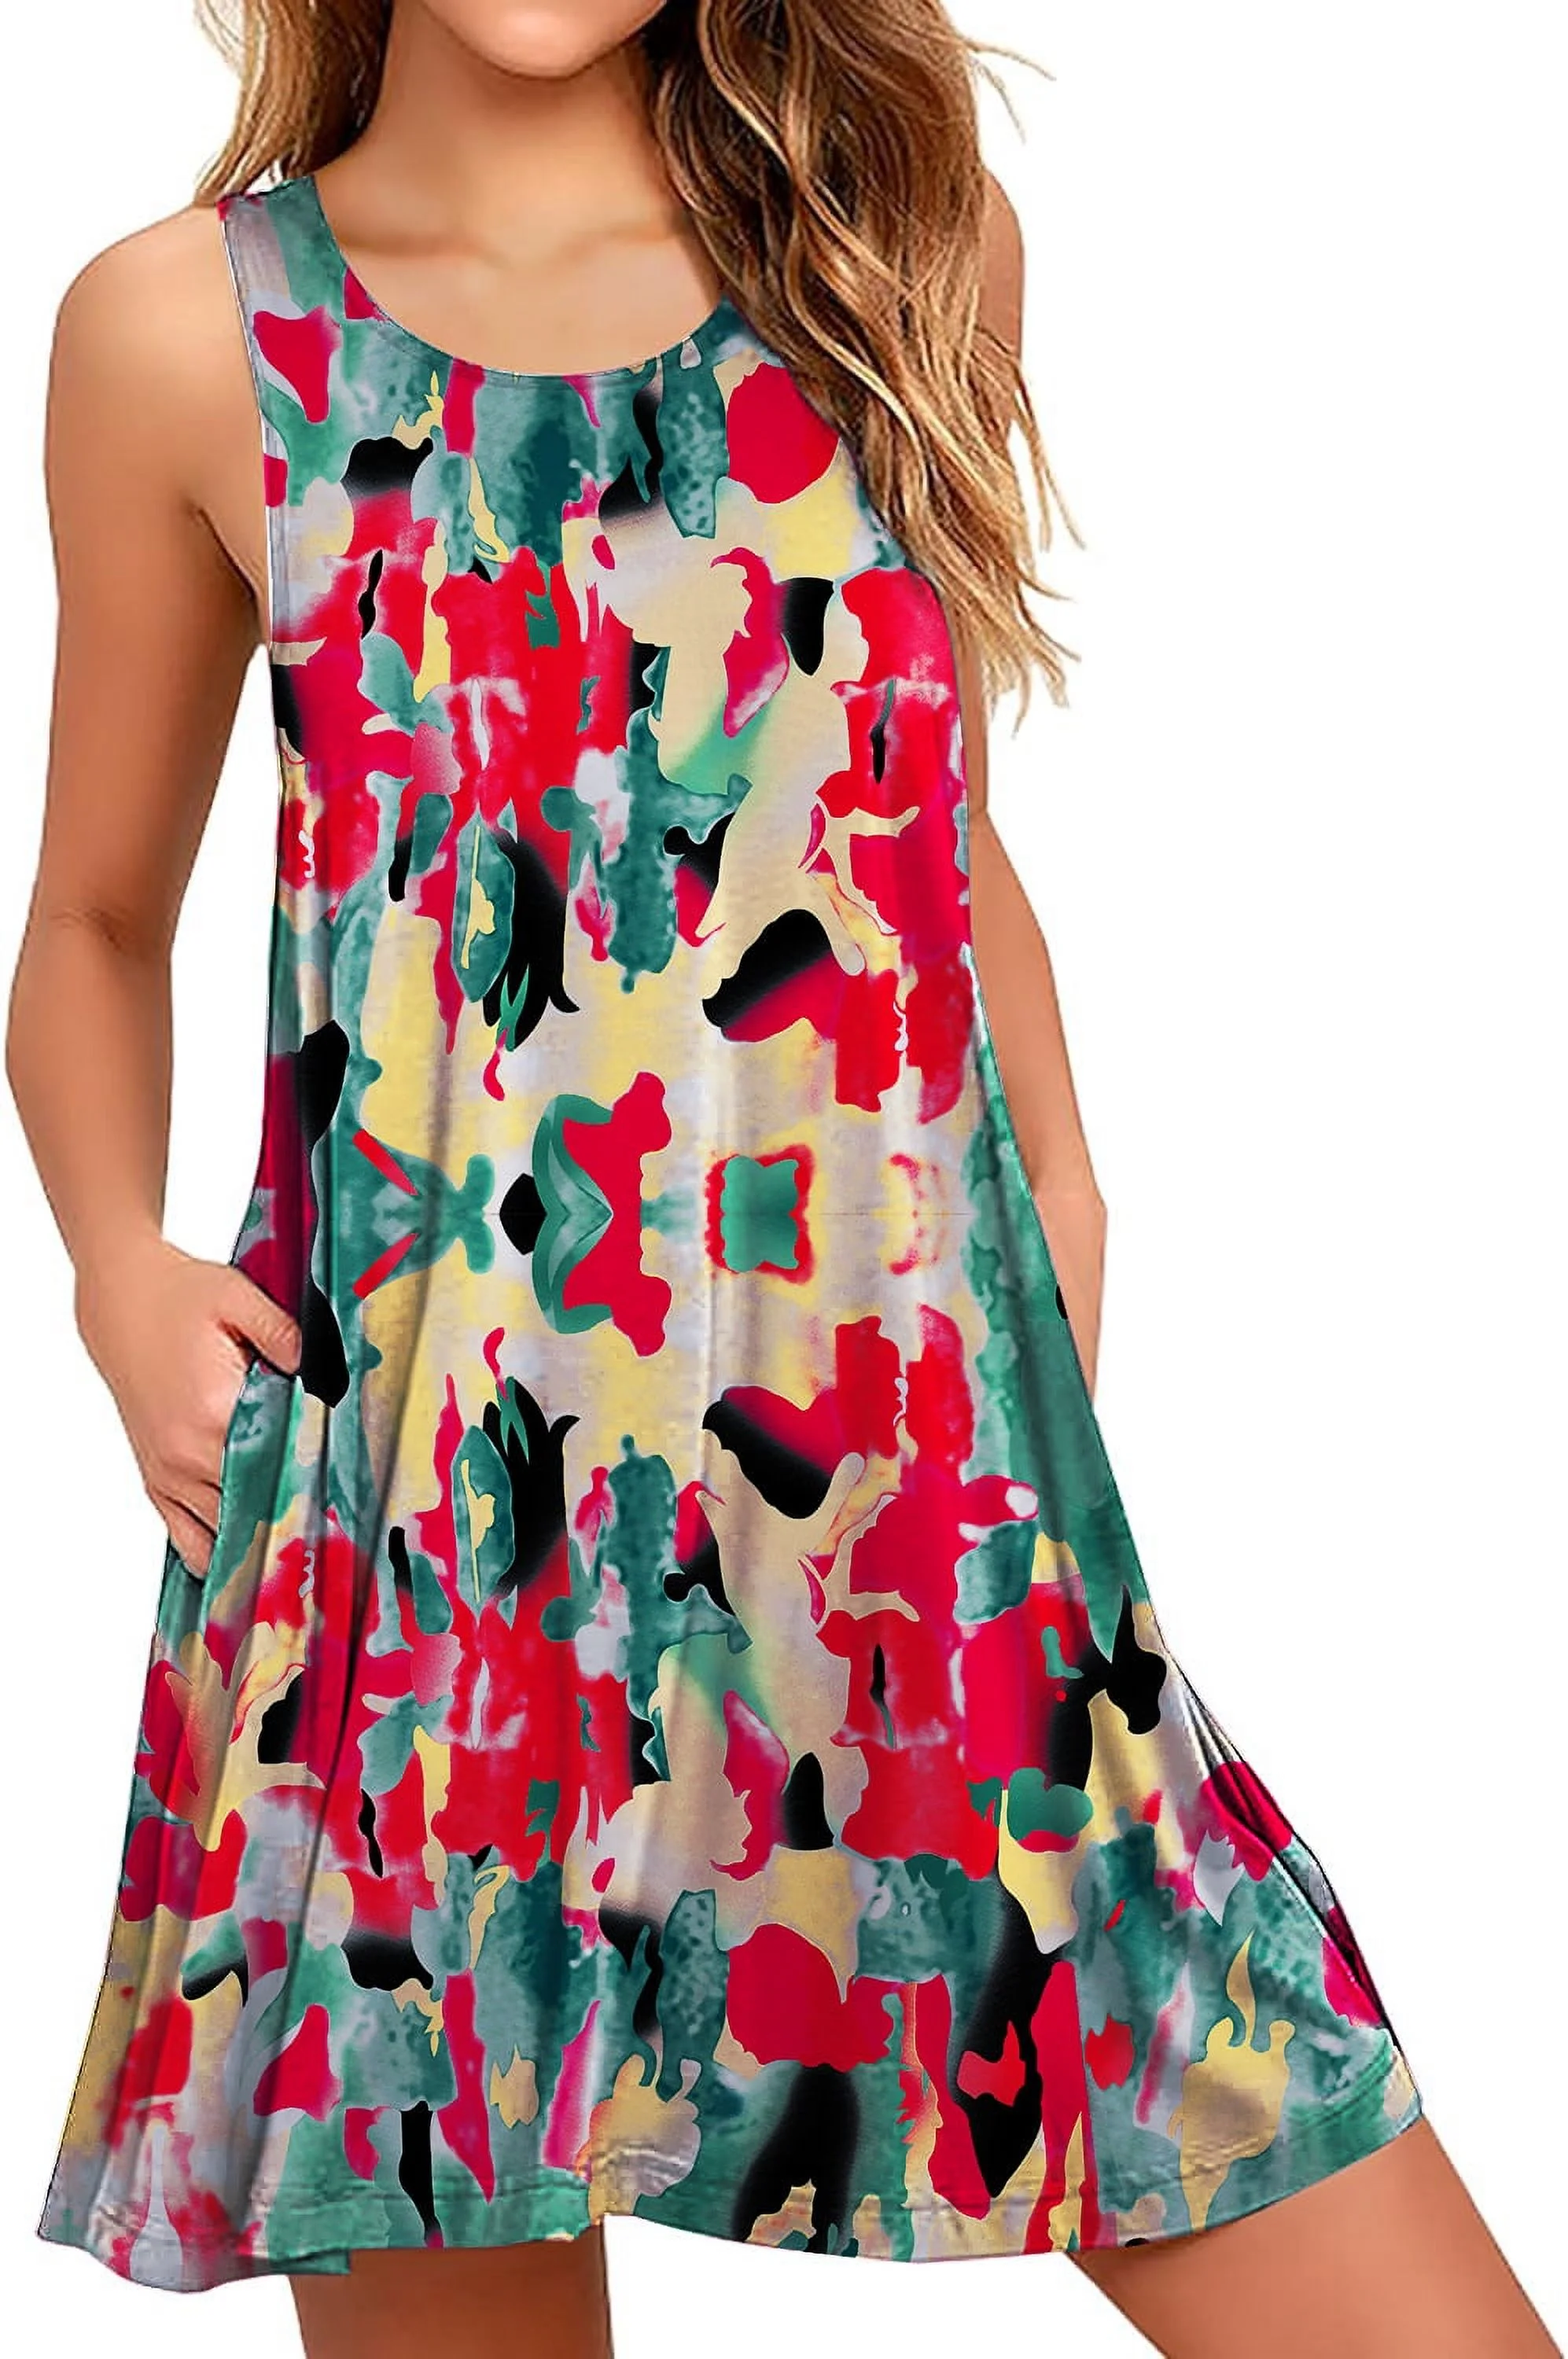 Anyjoin Women's Summer Dresses Beach Floral Tshirt Sundress Sleeveless Pockets Casual Tank Dress